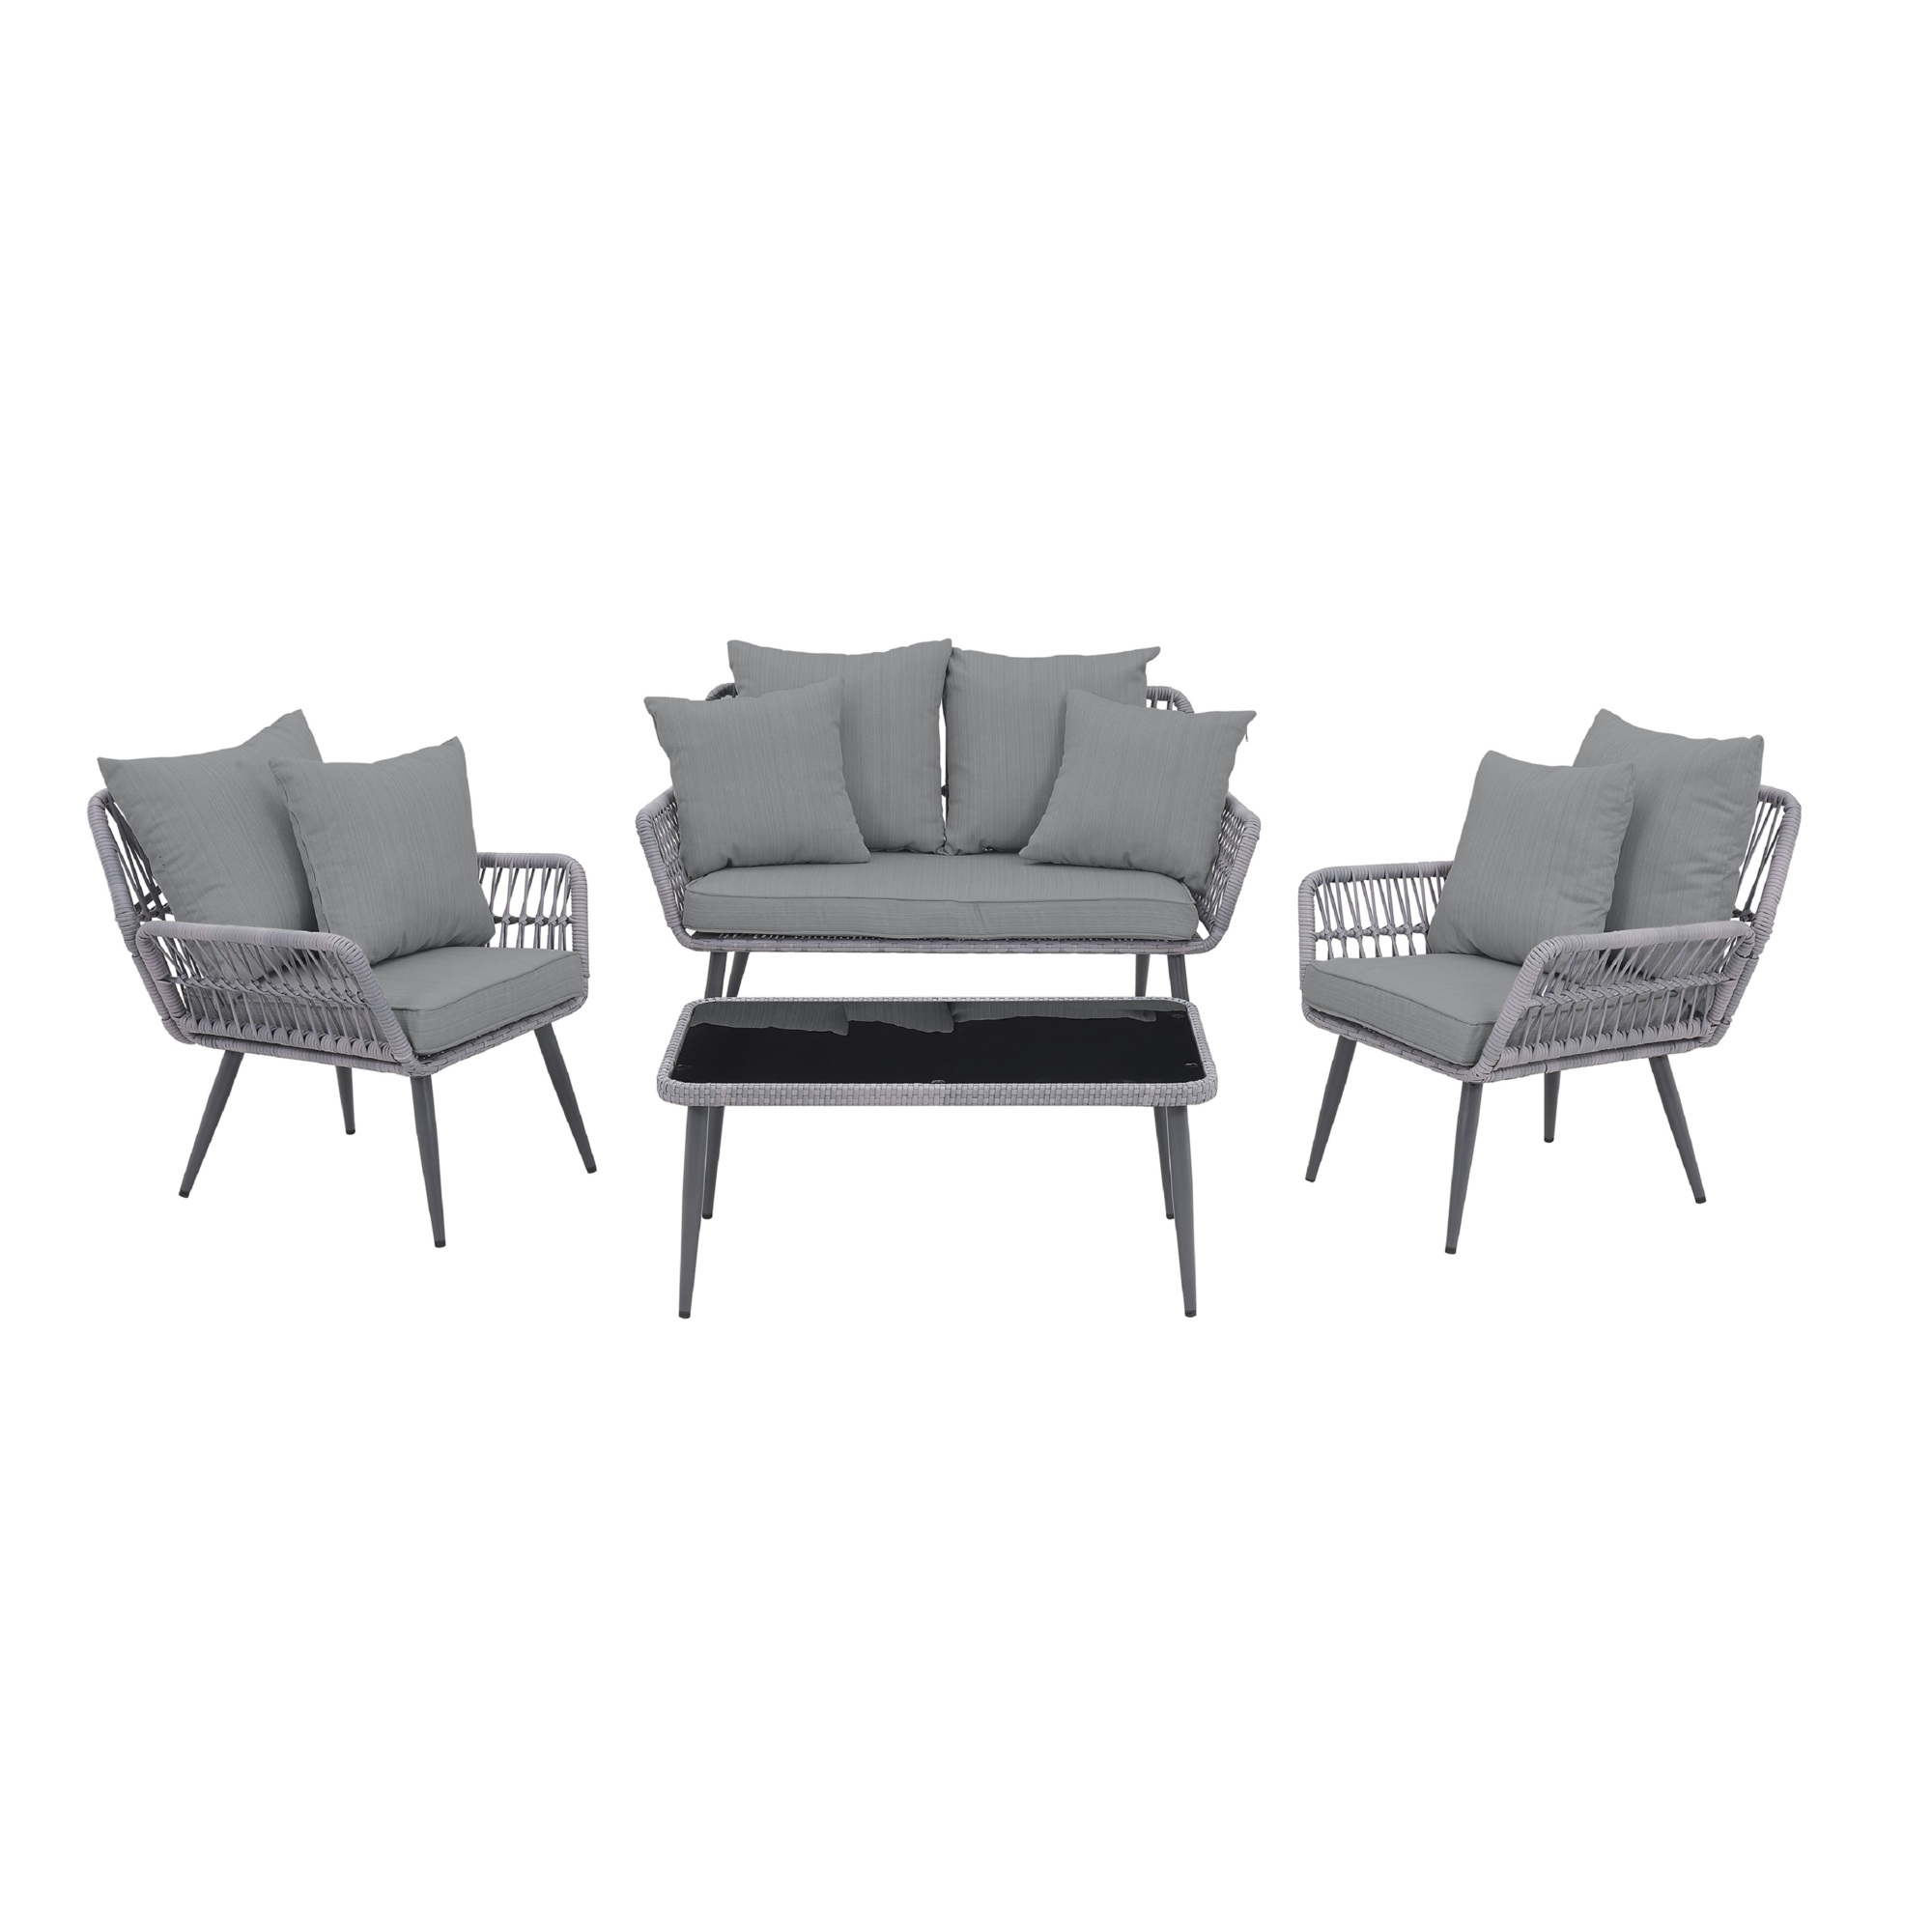 Manhattan Comfort, Portofino Rope Wicker 4Pc Patio Conv Set in Grey, Pieces (qty.) 4 Primary Color Gray, Seating Capacity 4 Model OD-CV019